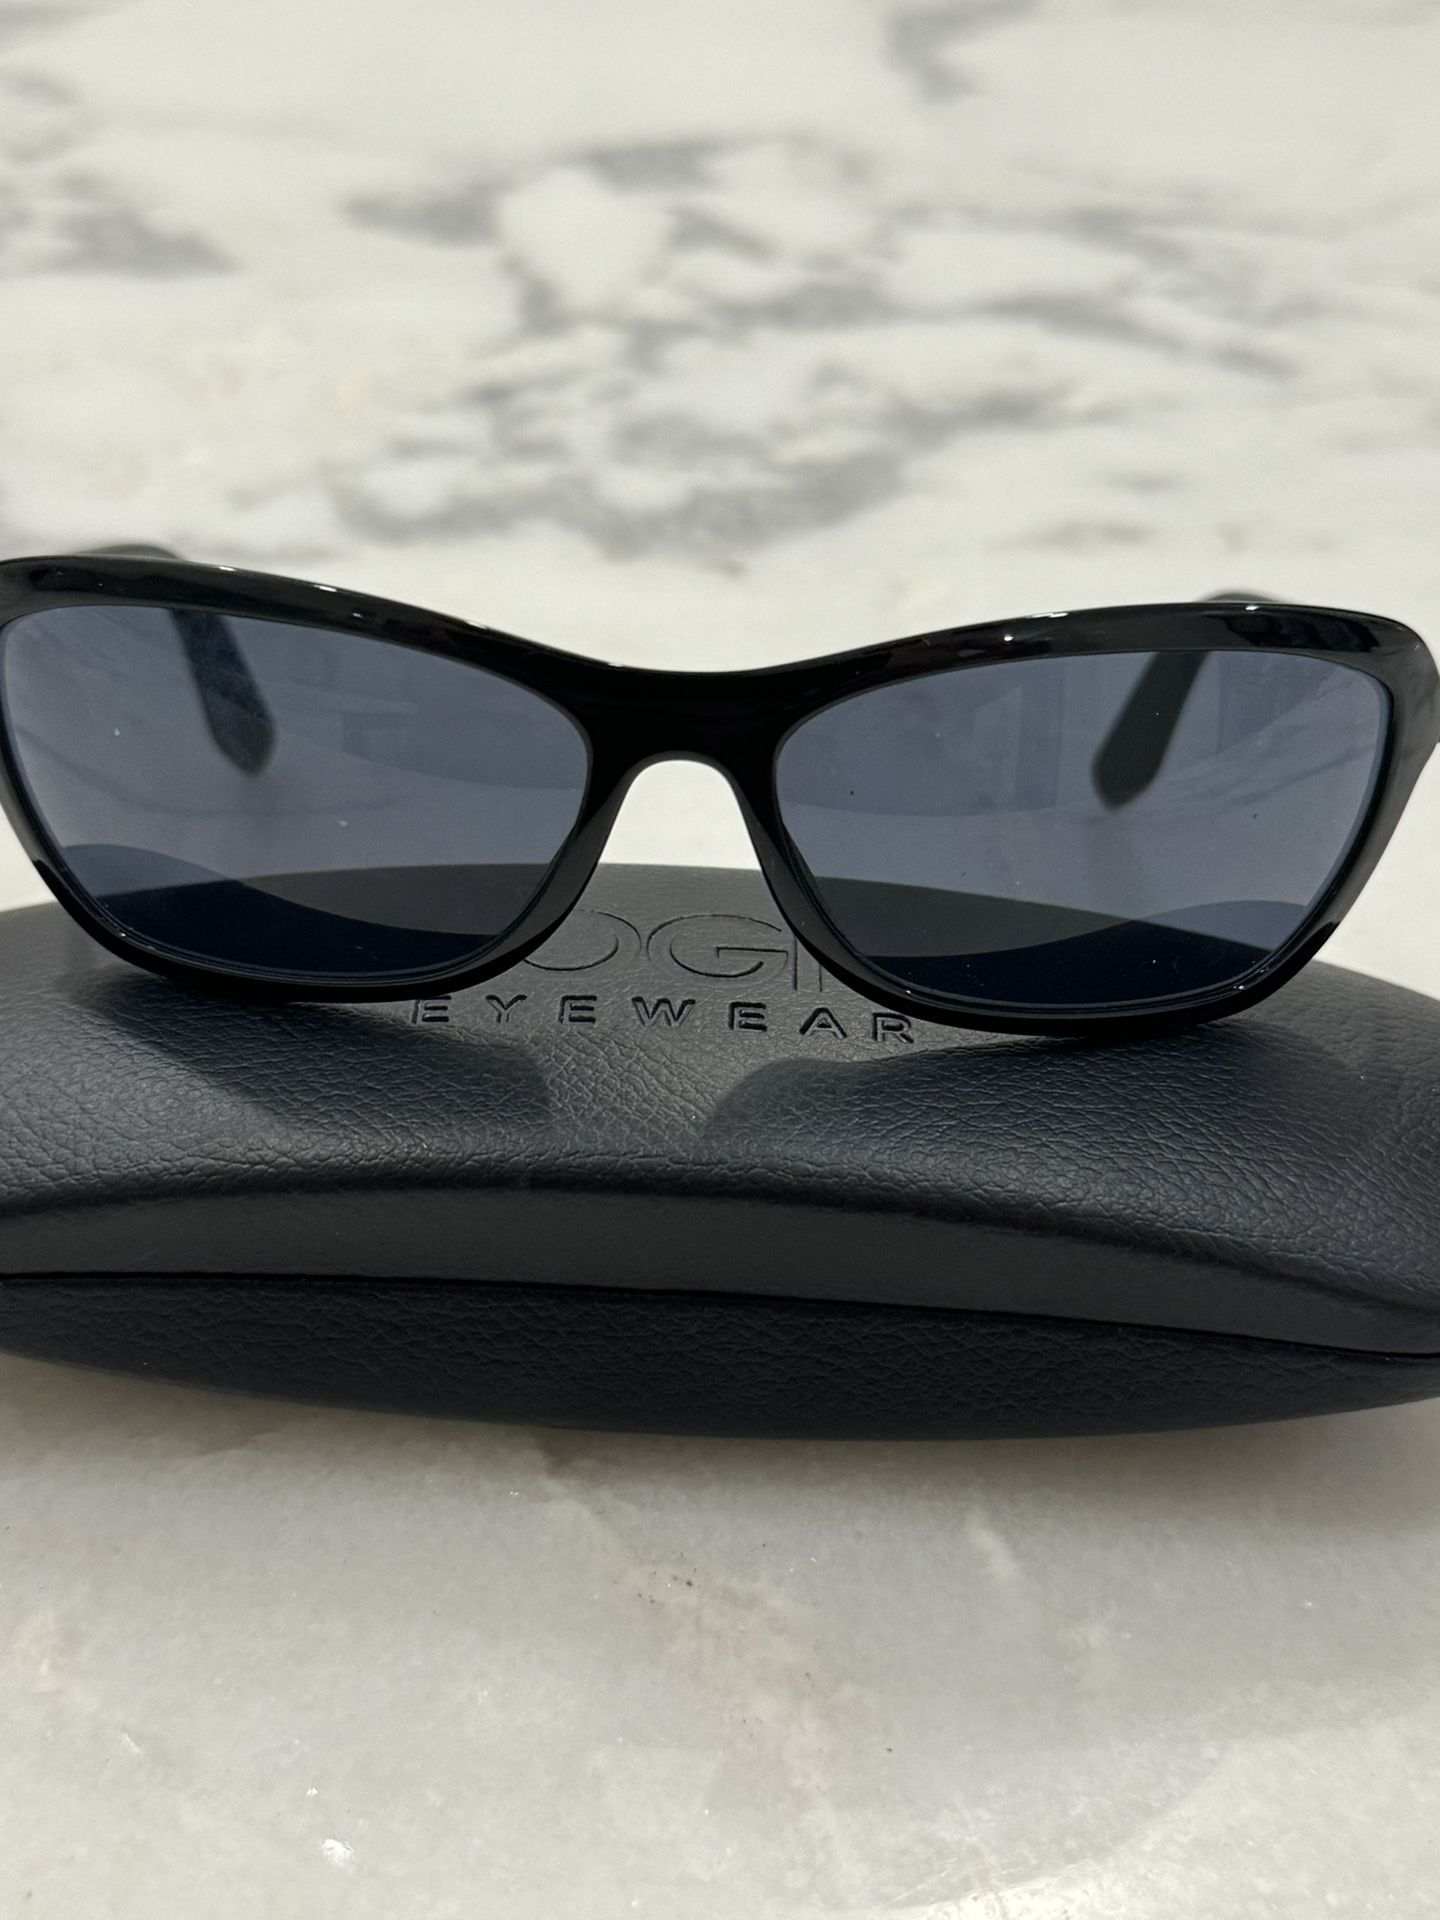 Women’s Silhouette Sunglasses - Excellent Condition - Originally $695. Asking $175